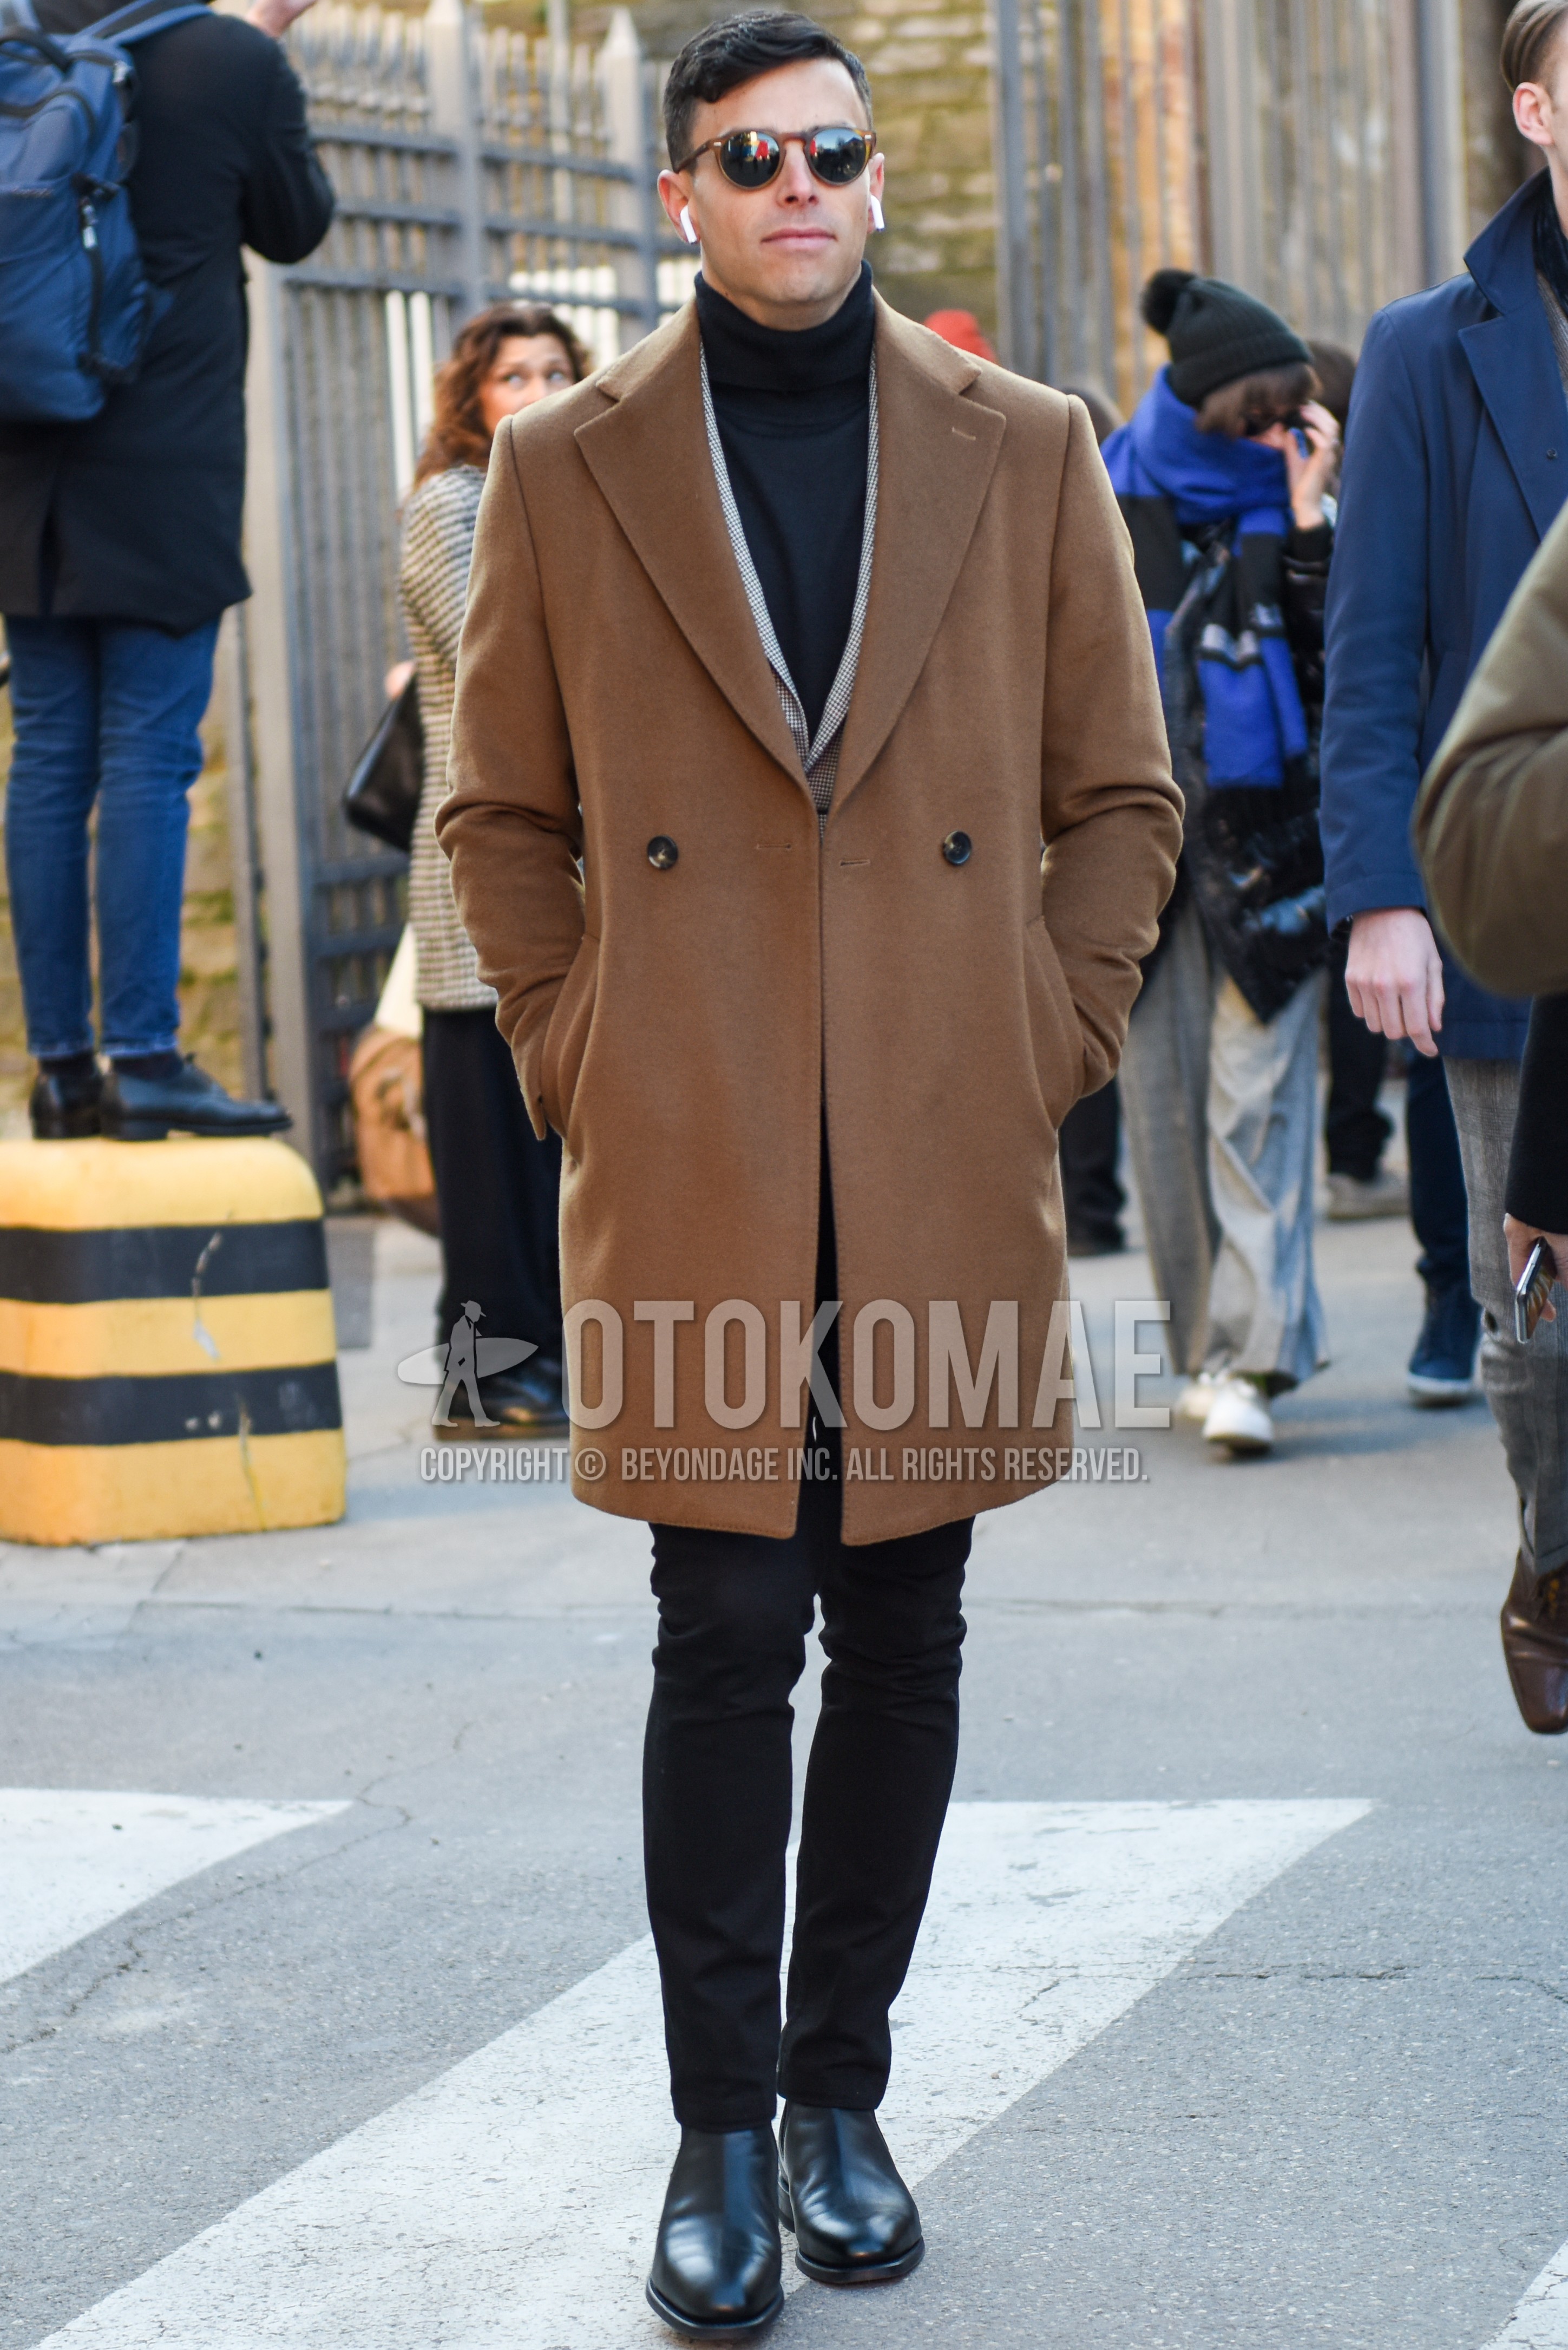 Men's autumn winter outfit with brown tortoiseshell sunglasses, beige plain chester coat, gray check tailored jacket, dark gray plain turtleneck knit, black plain denim/jeans, black side-gore boots.